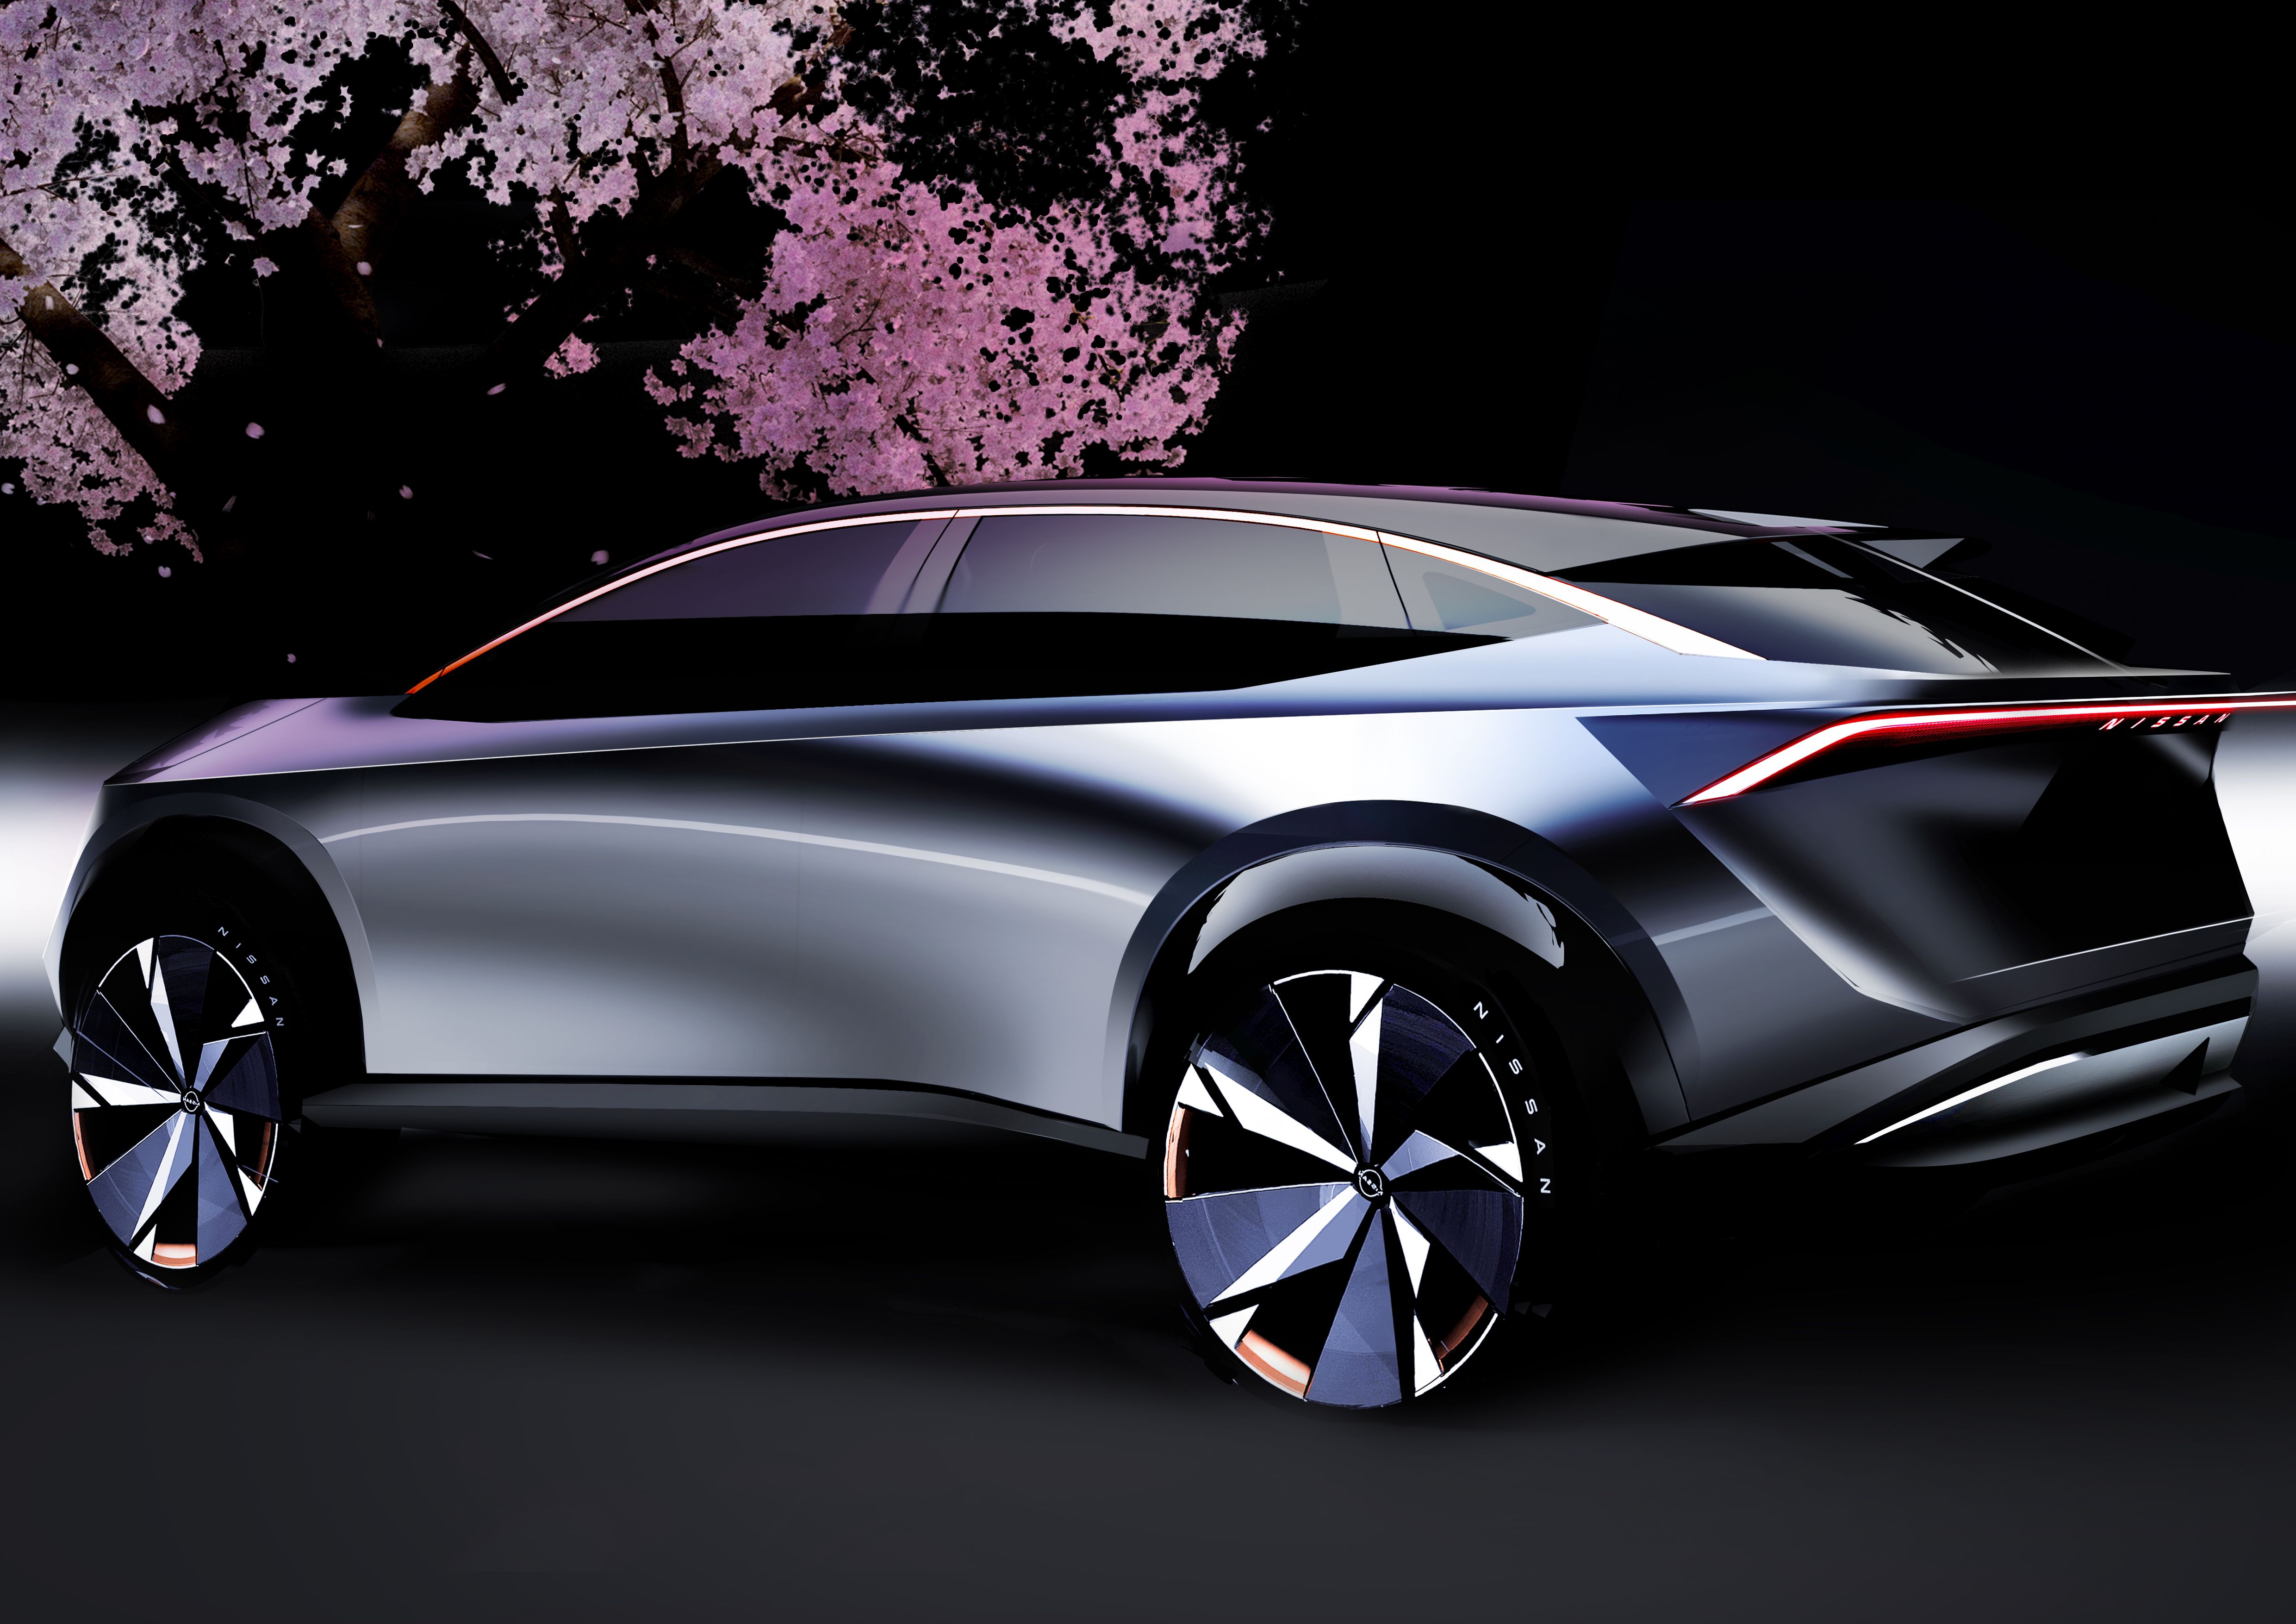 2019 Nissan Ariya Concept